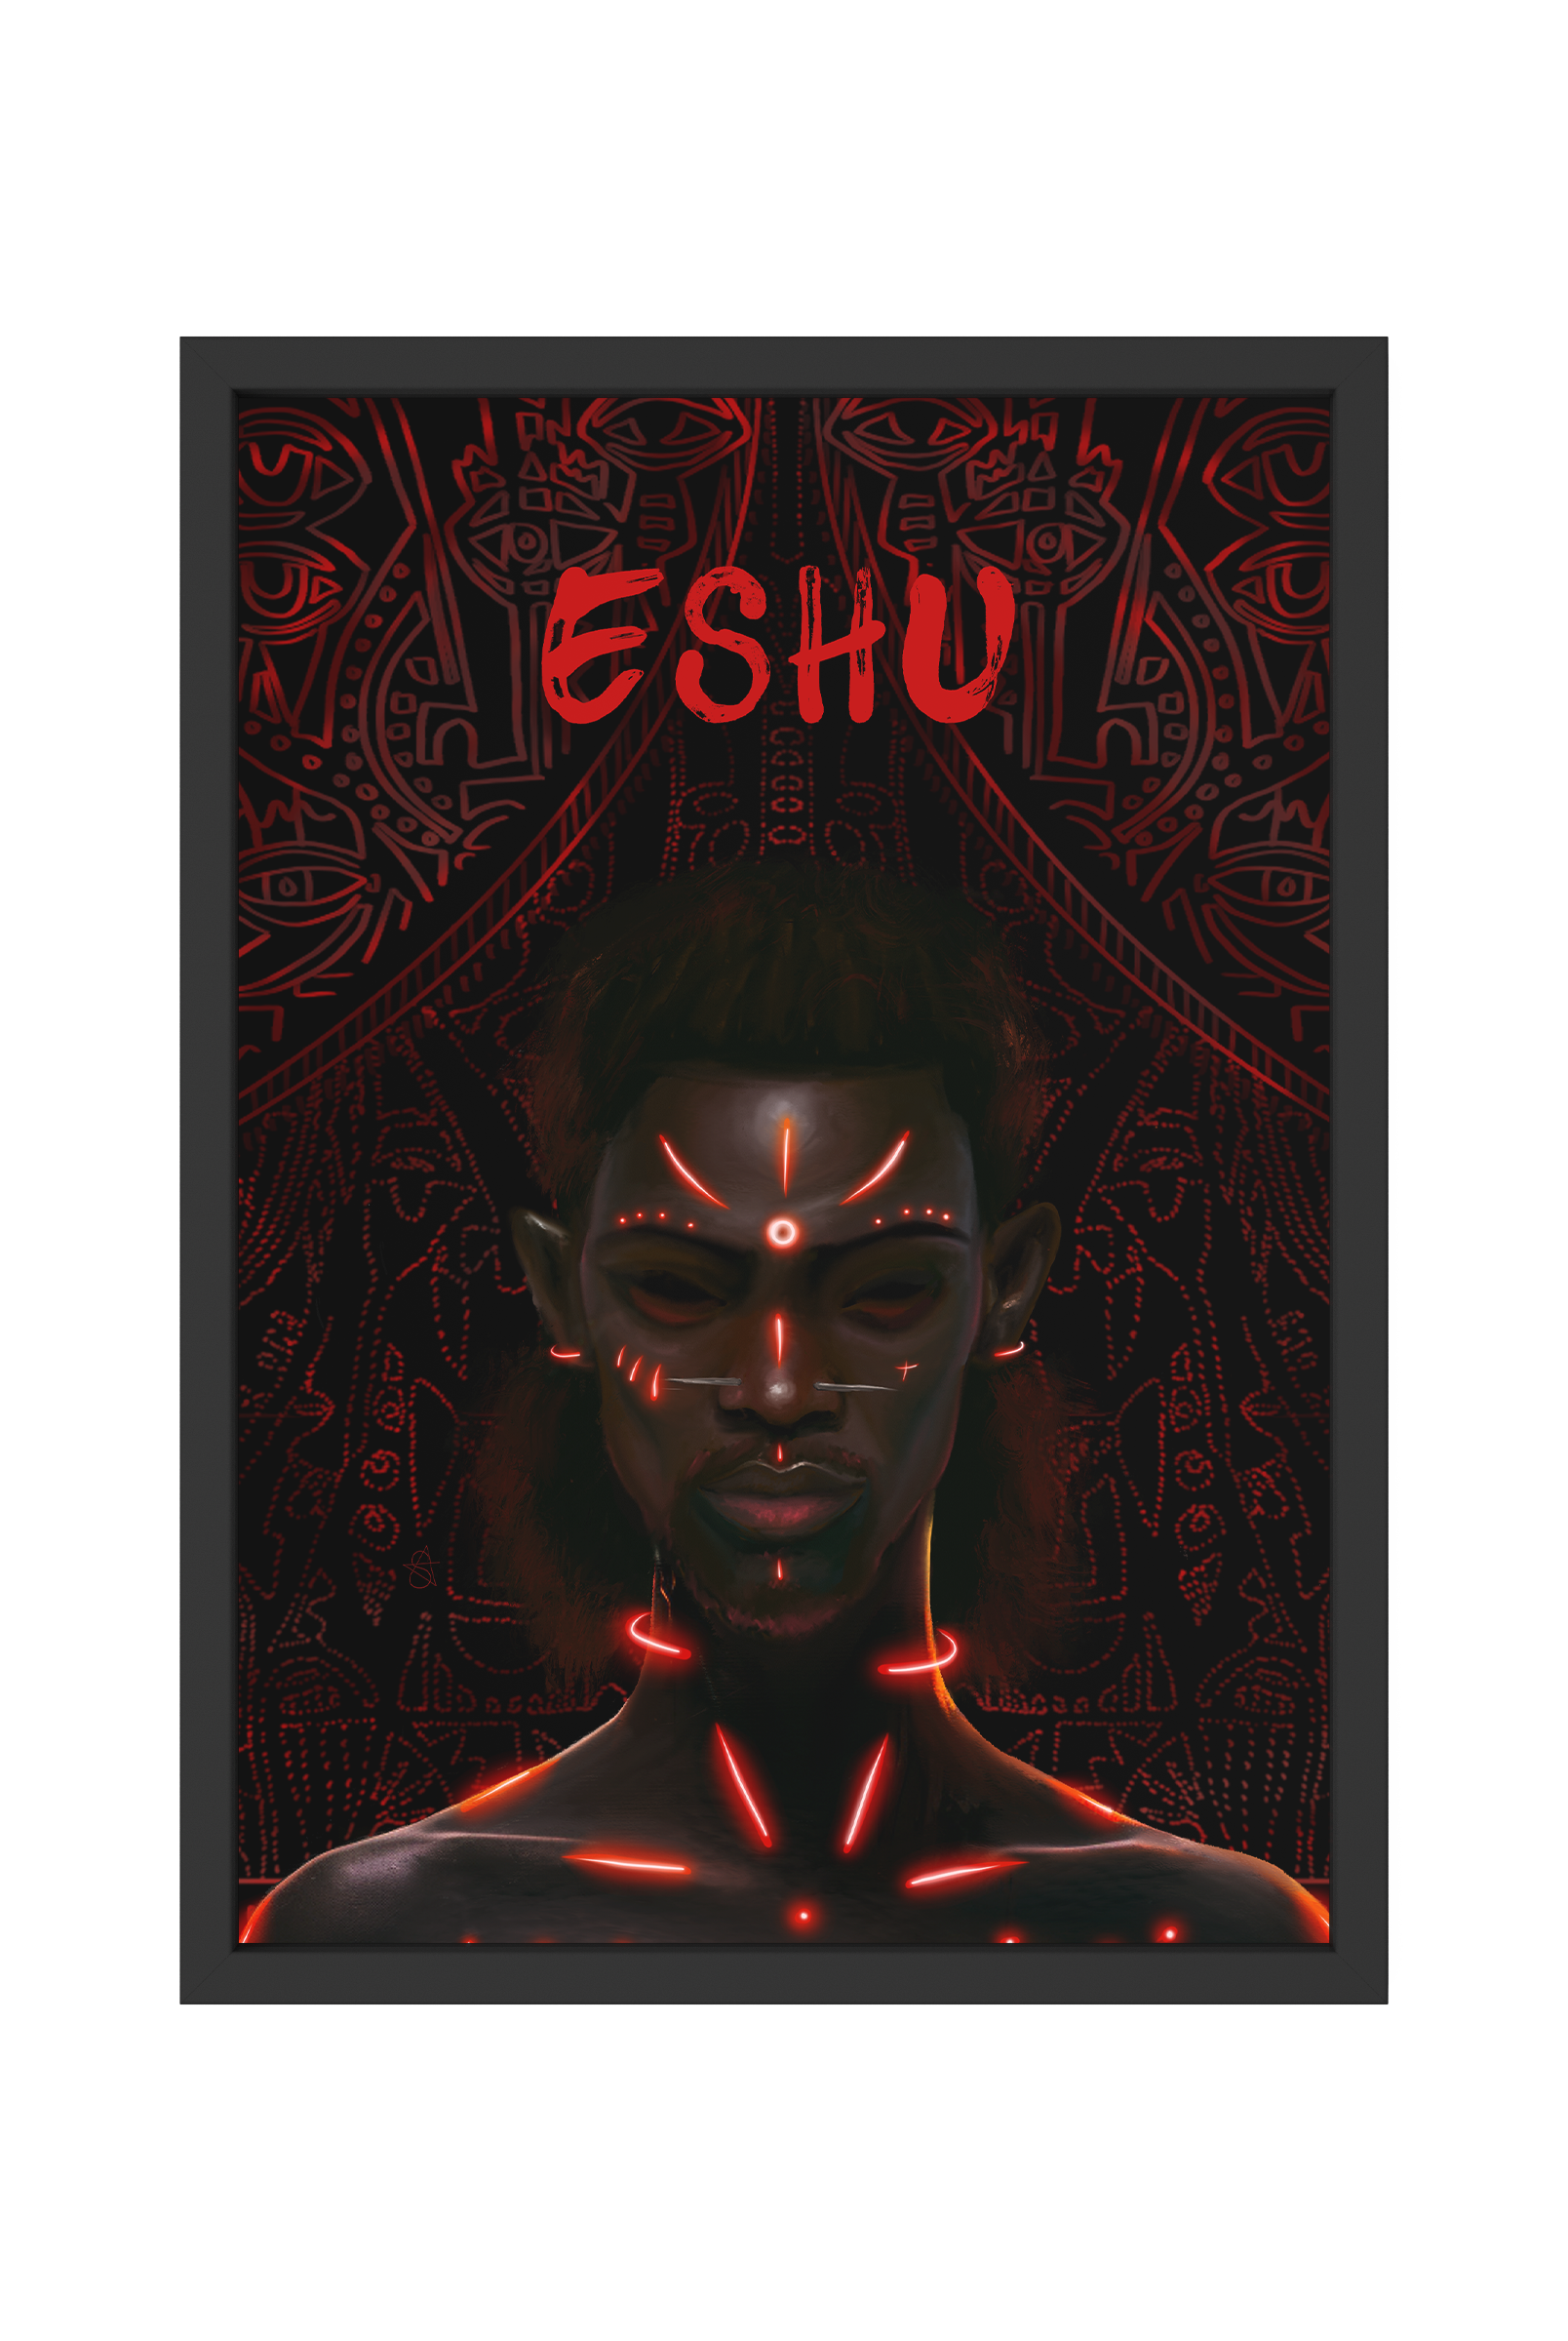 Eshu Holographic Art Print on high-quality matte or velvet paper, framed in gallery black, white, or natural maple, depicting Yoruba Orisa of crossroads.